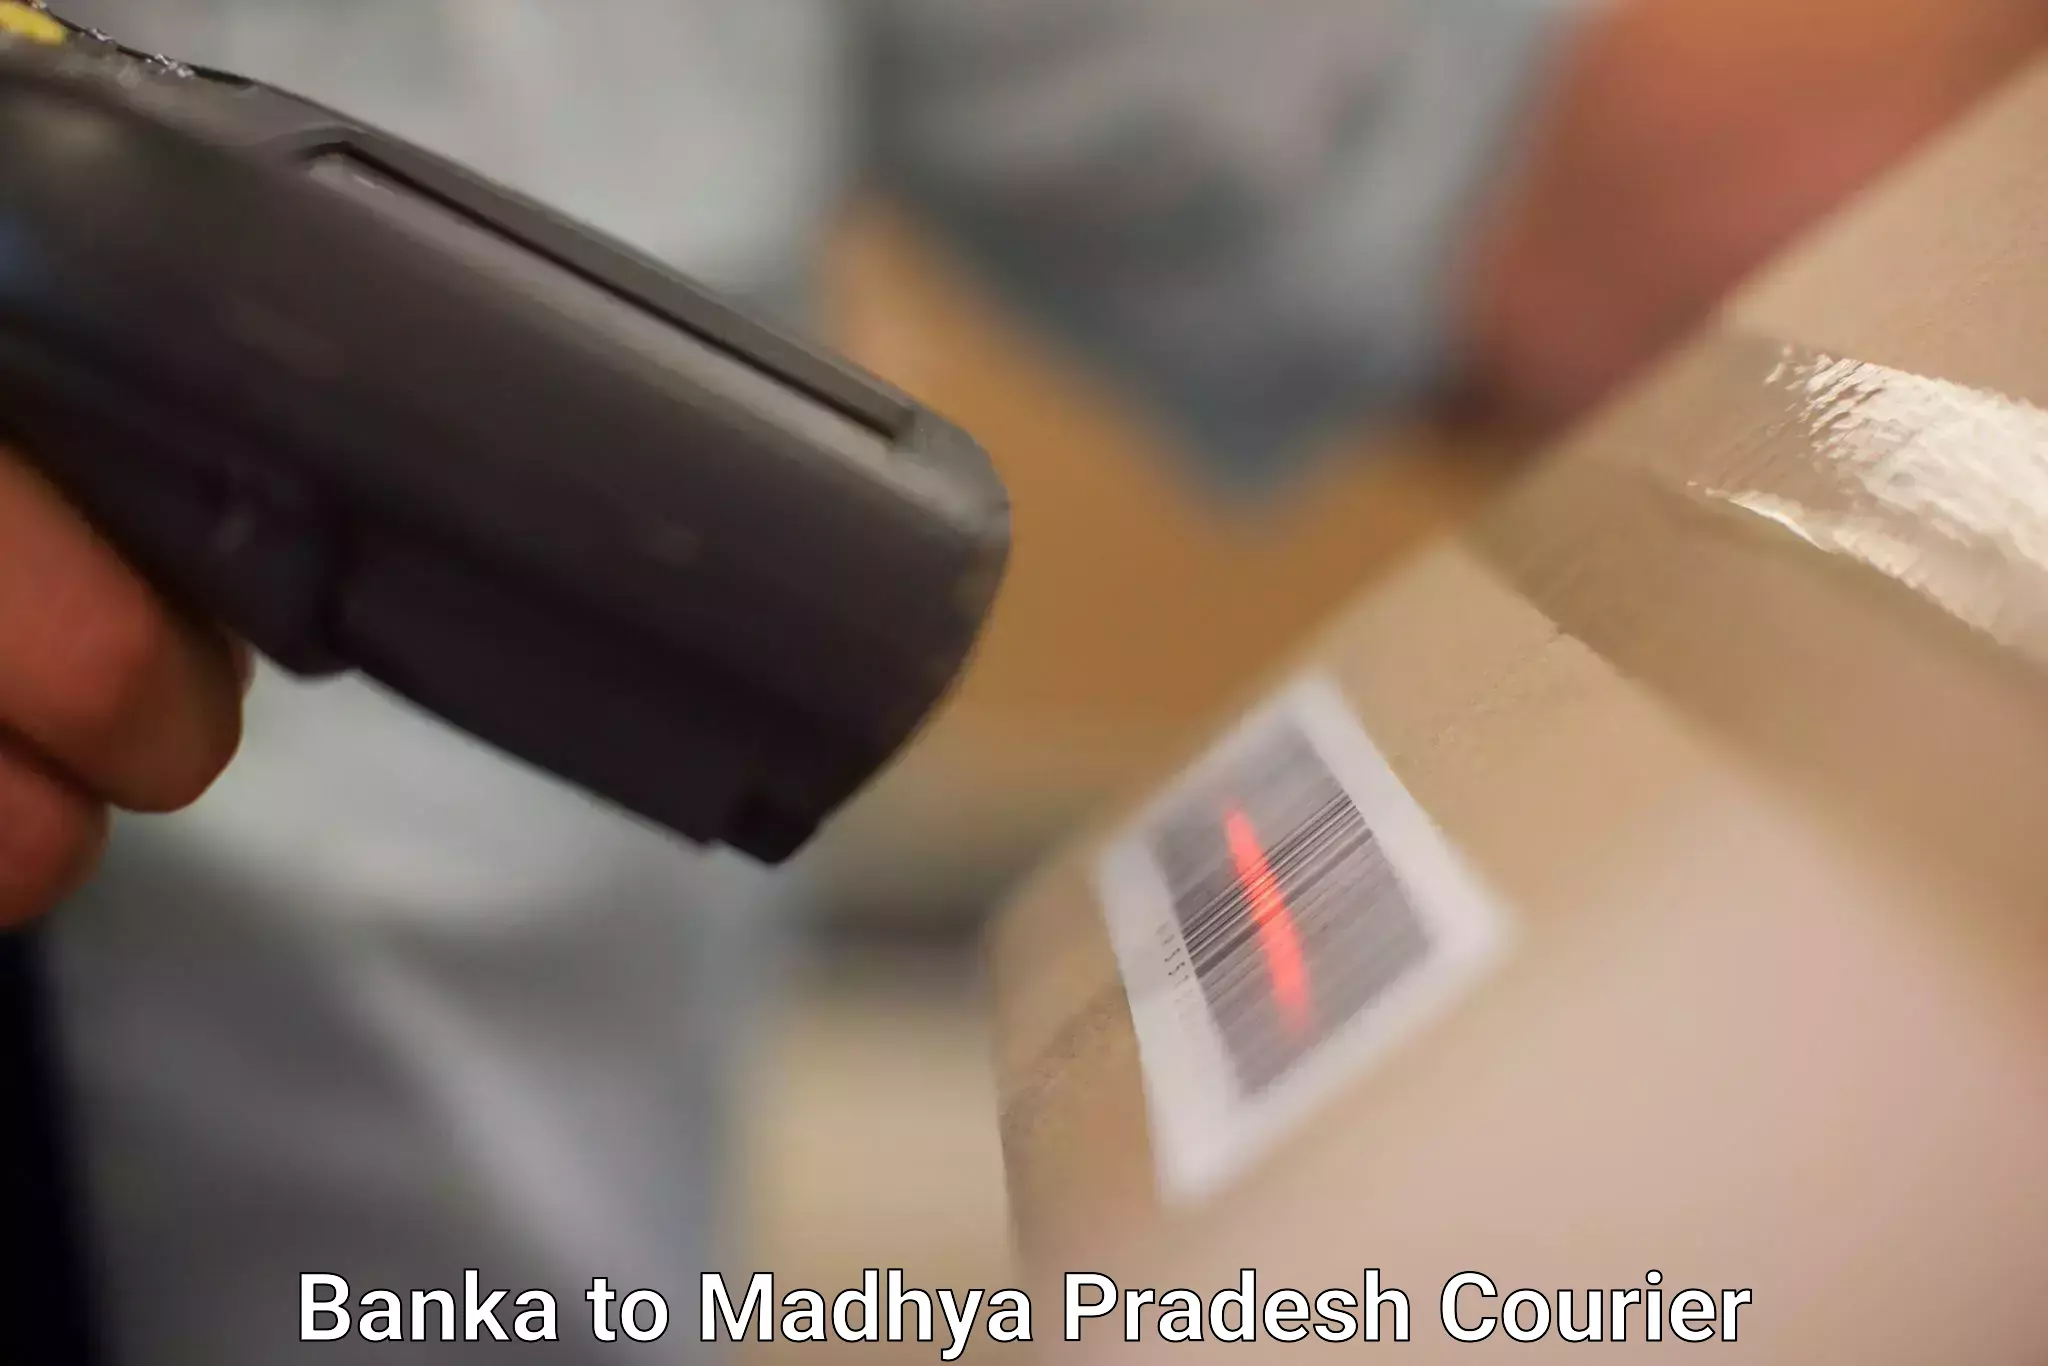 Enhanced tracking features Banka to Madhya Pradesh